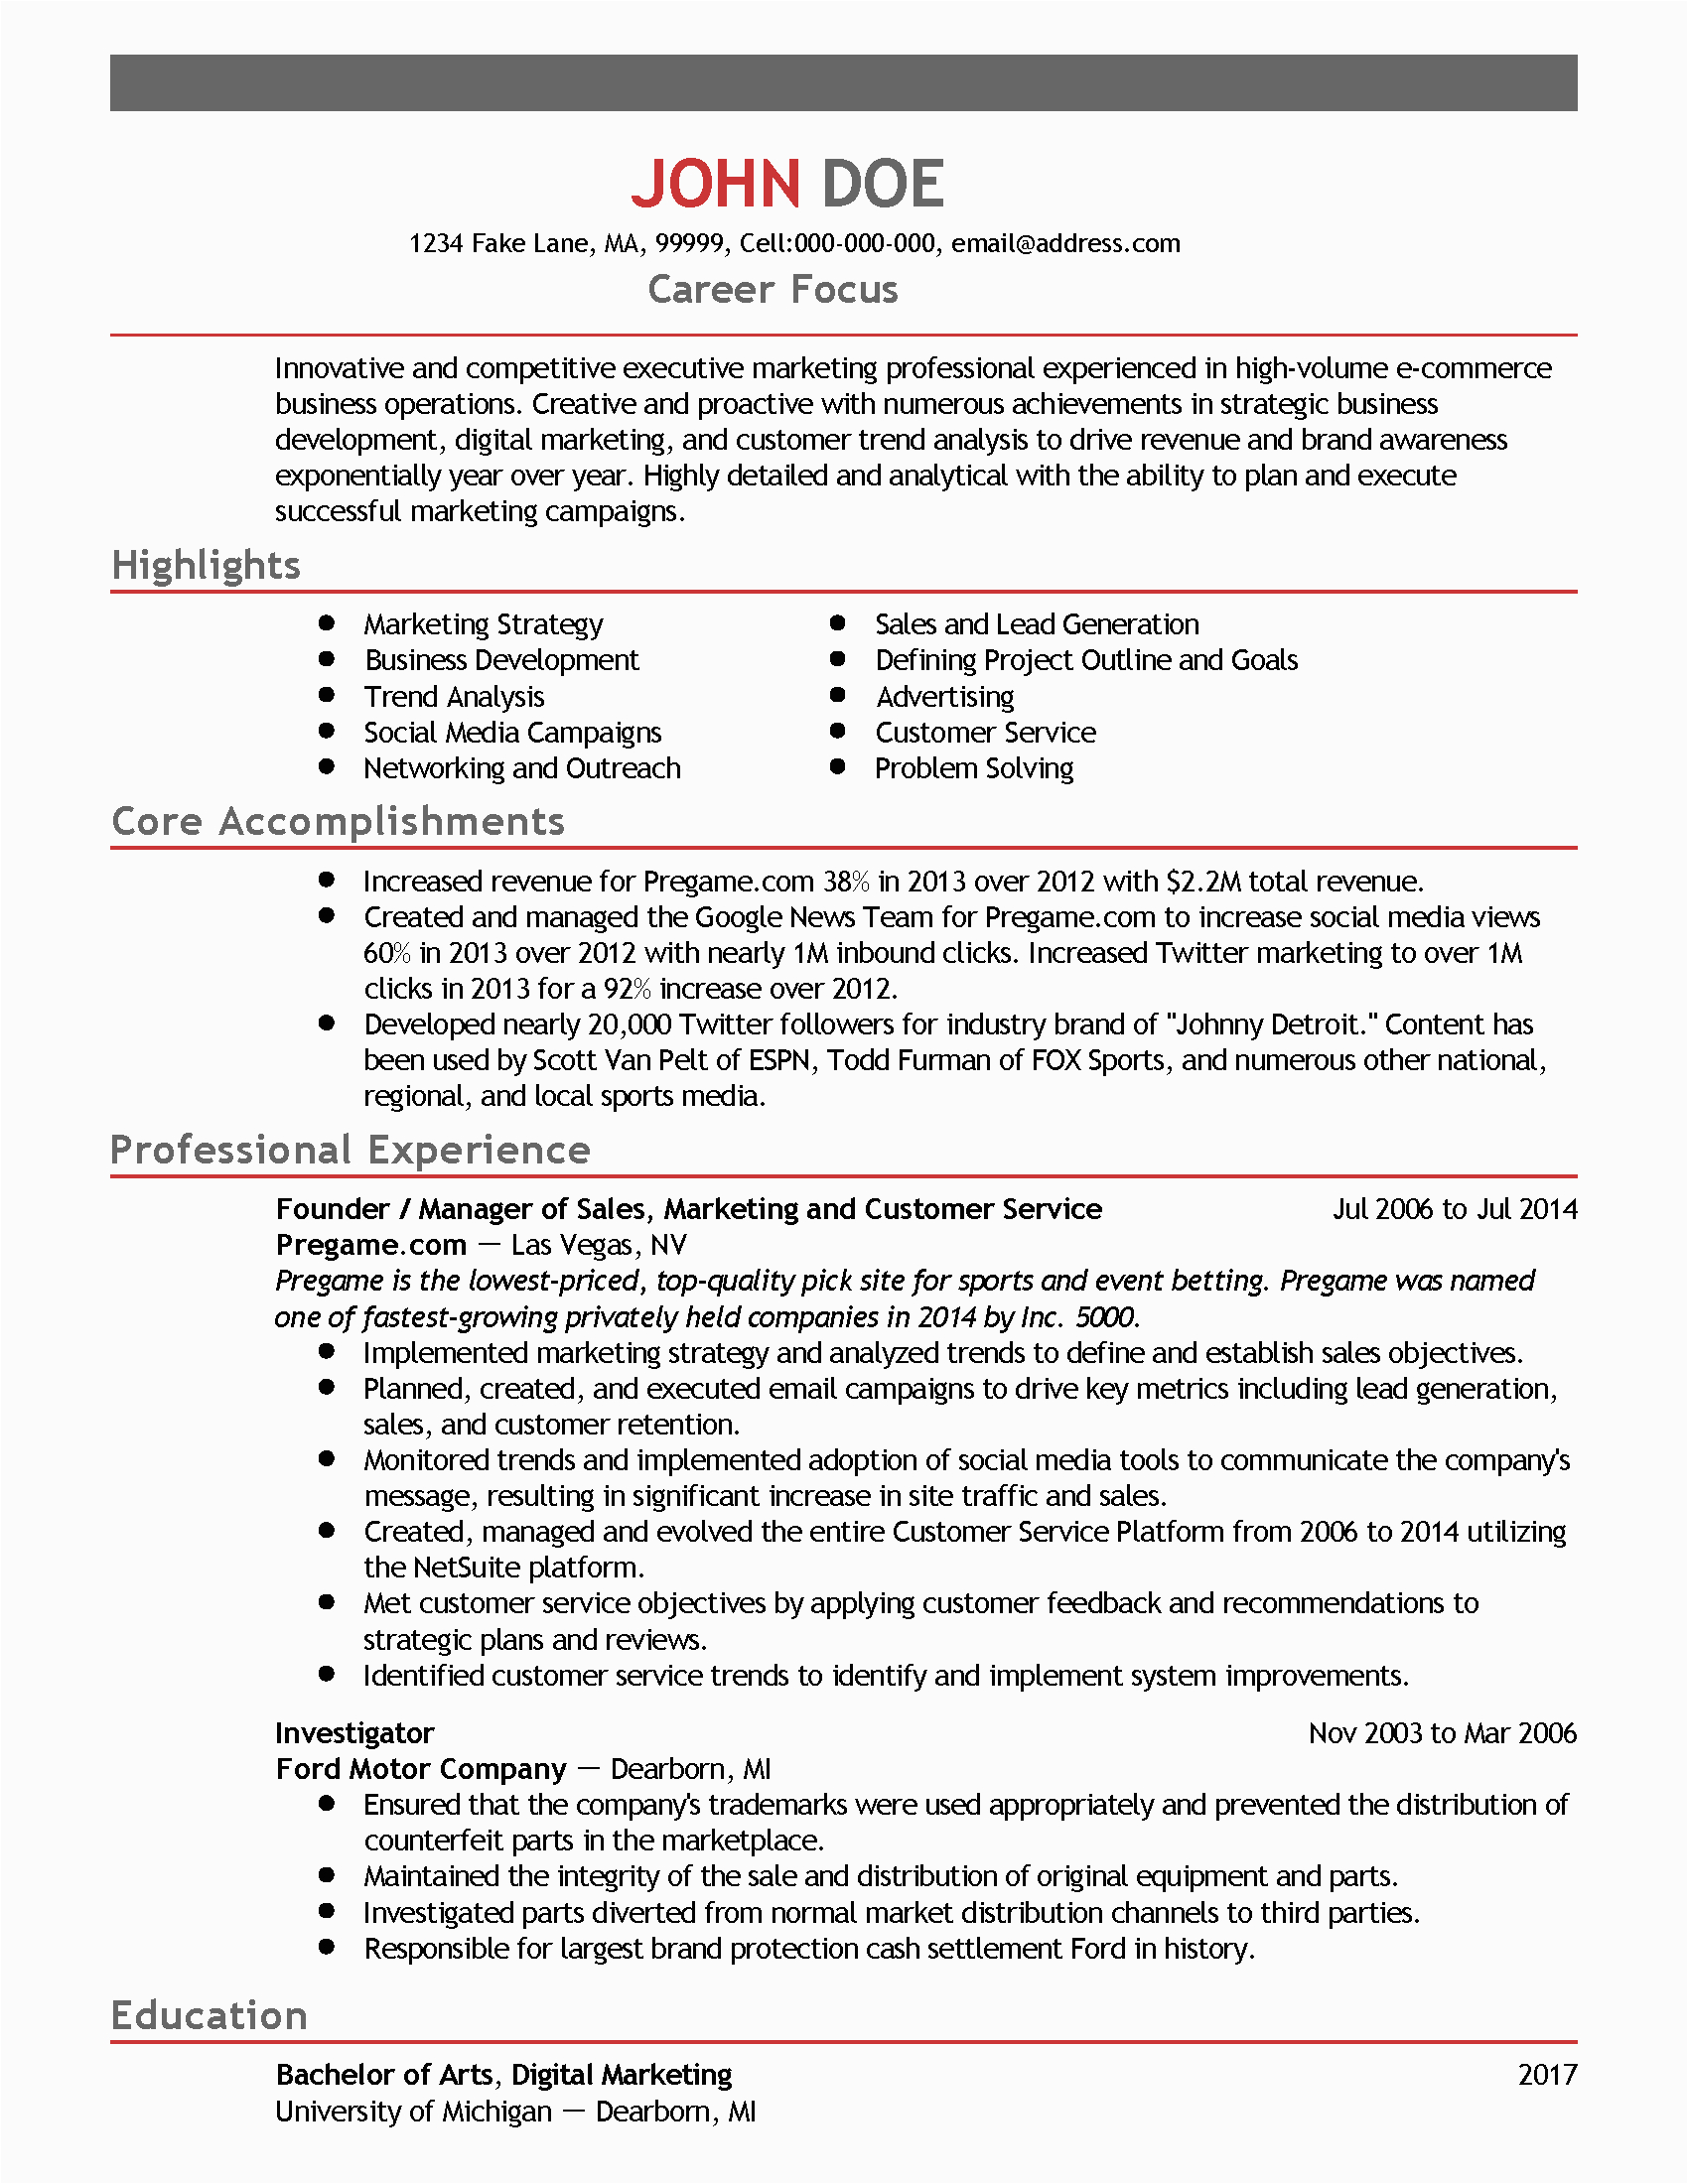 Sample Resume for Ecommerce Operations Manager E Merce Resume formats